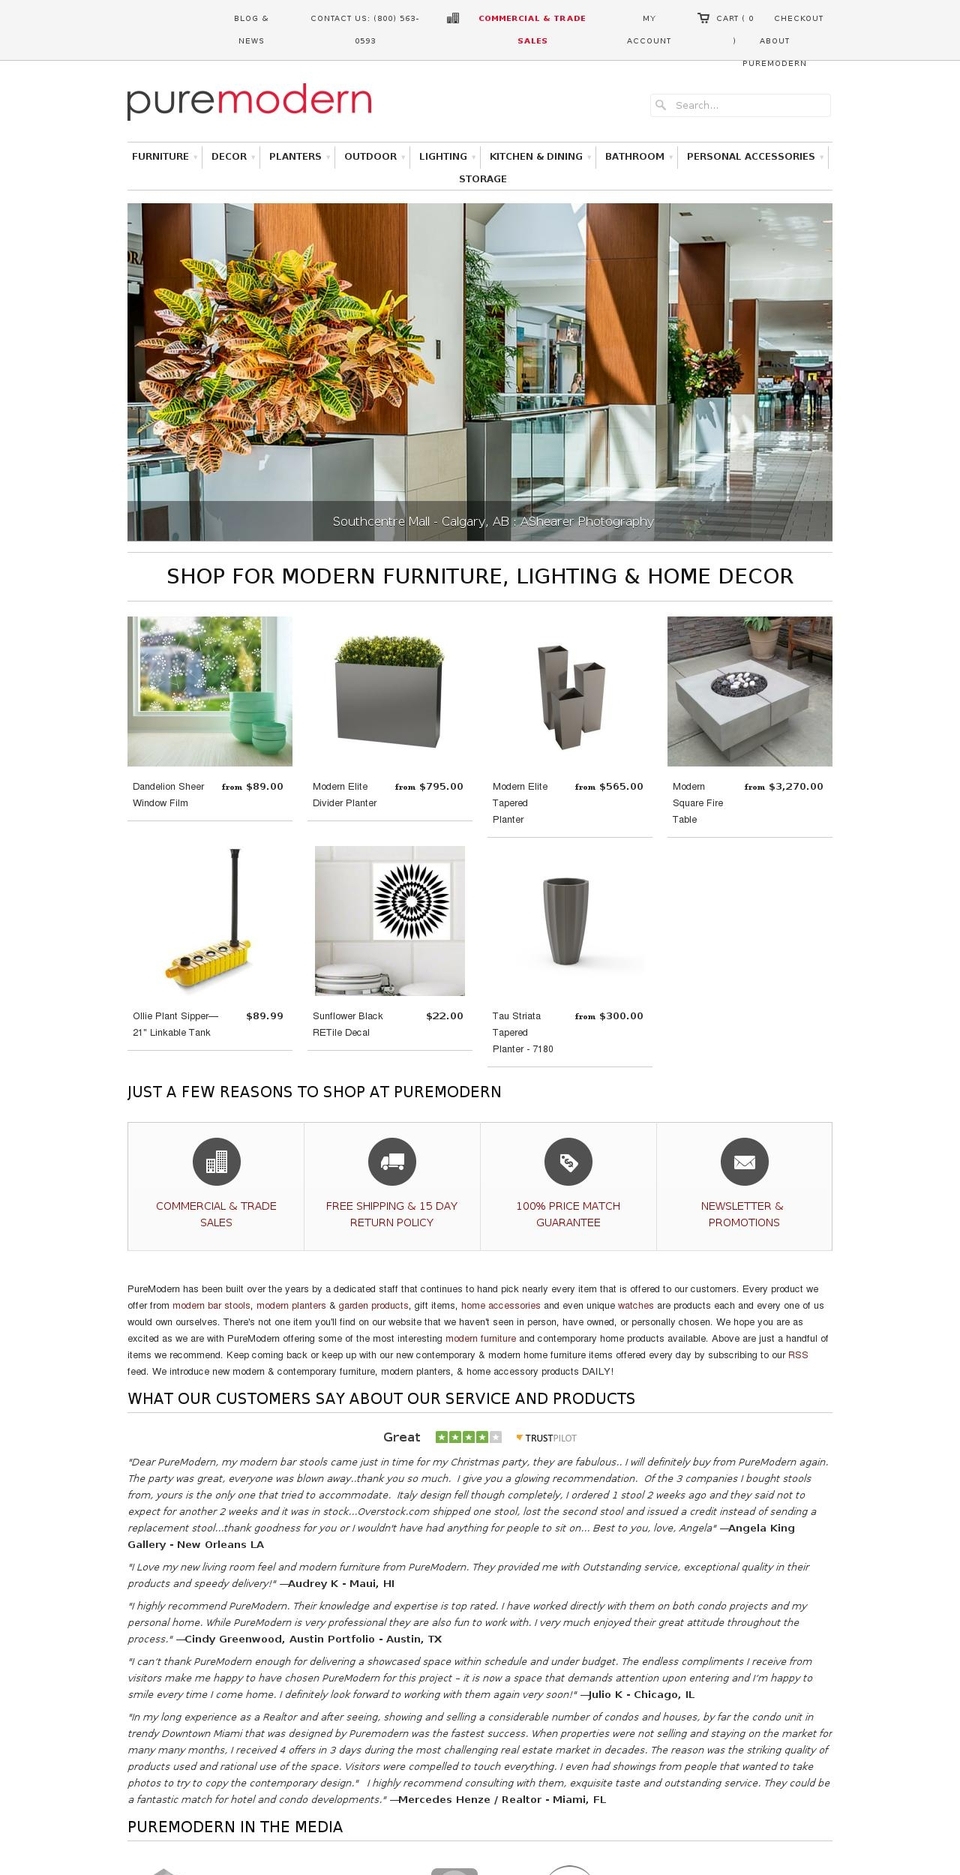 puremodern.com shopify website screenshot